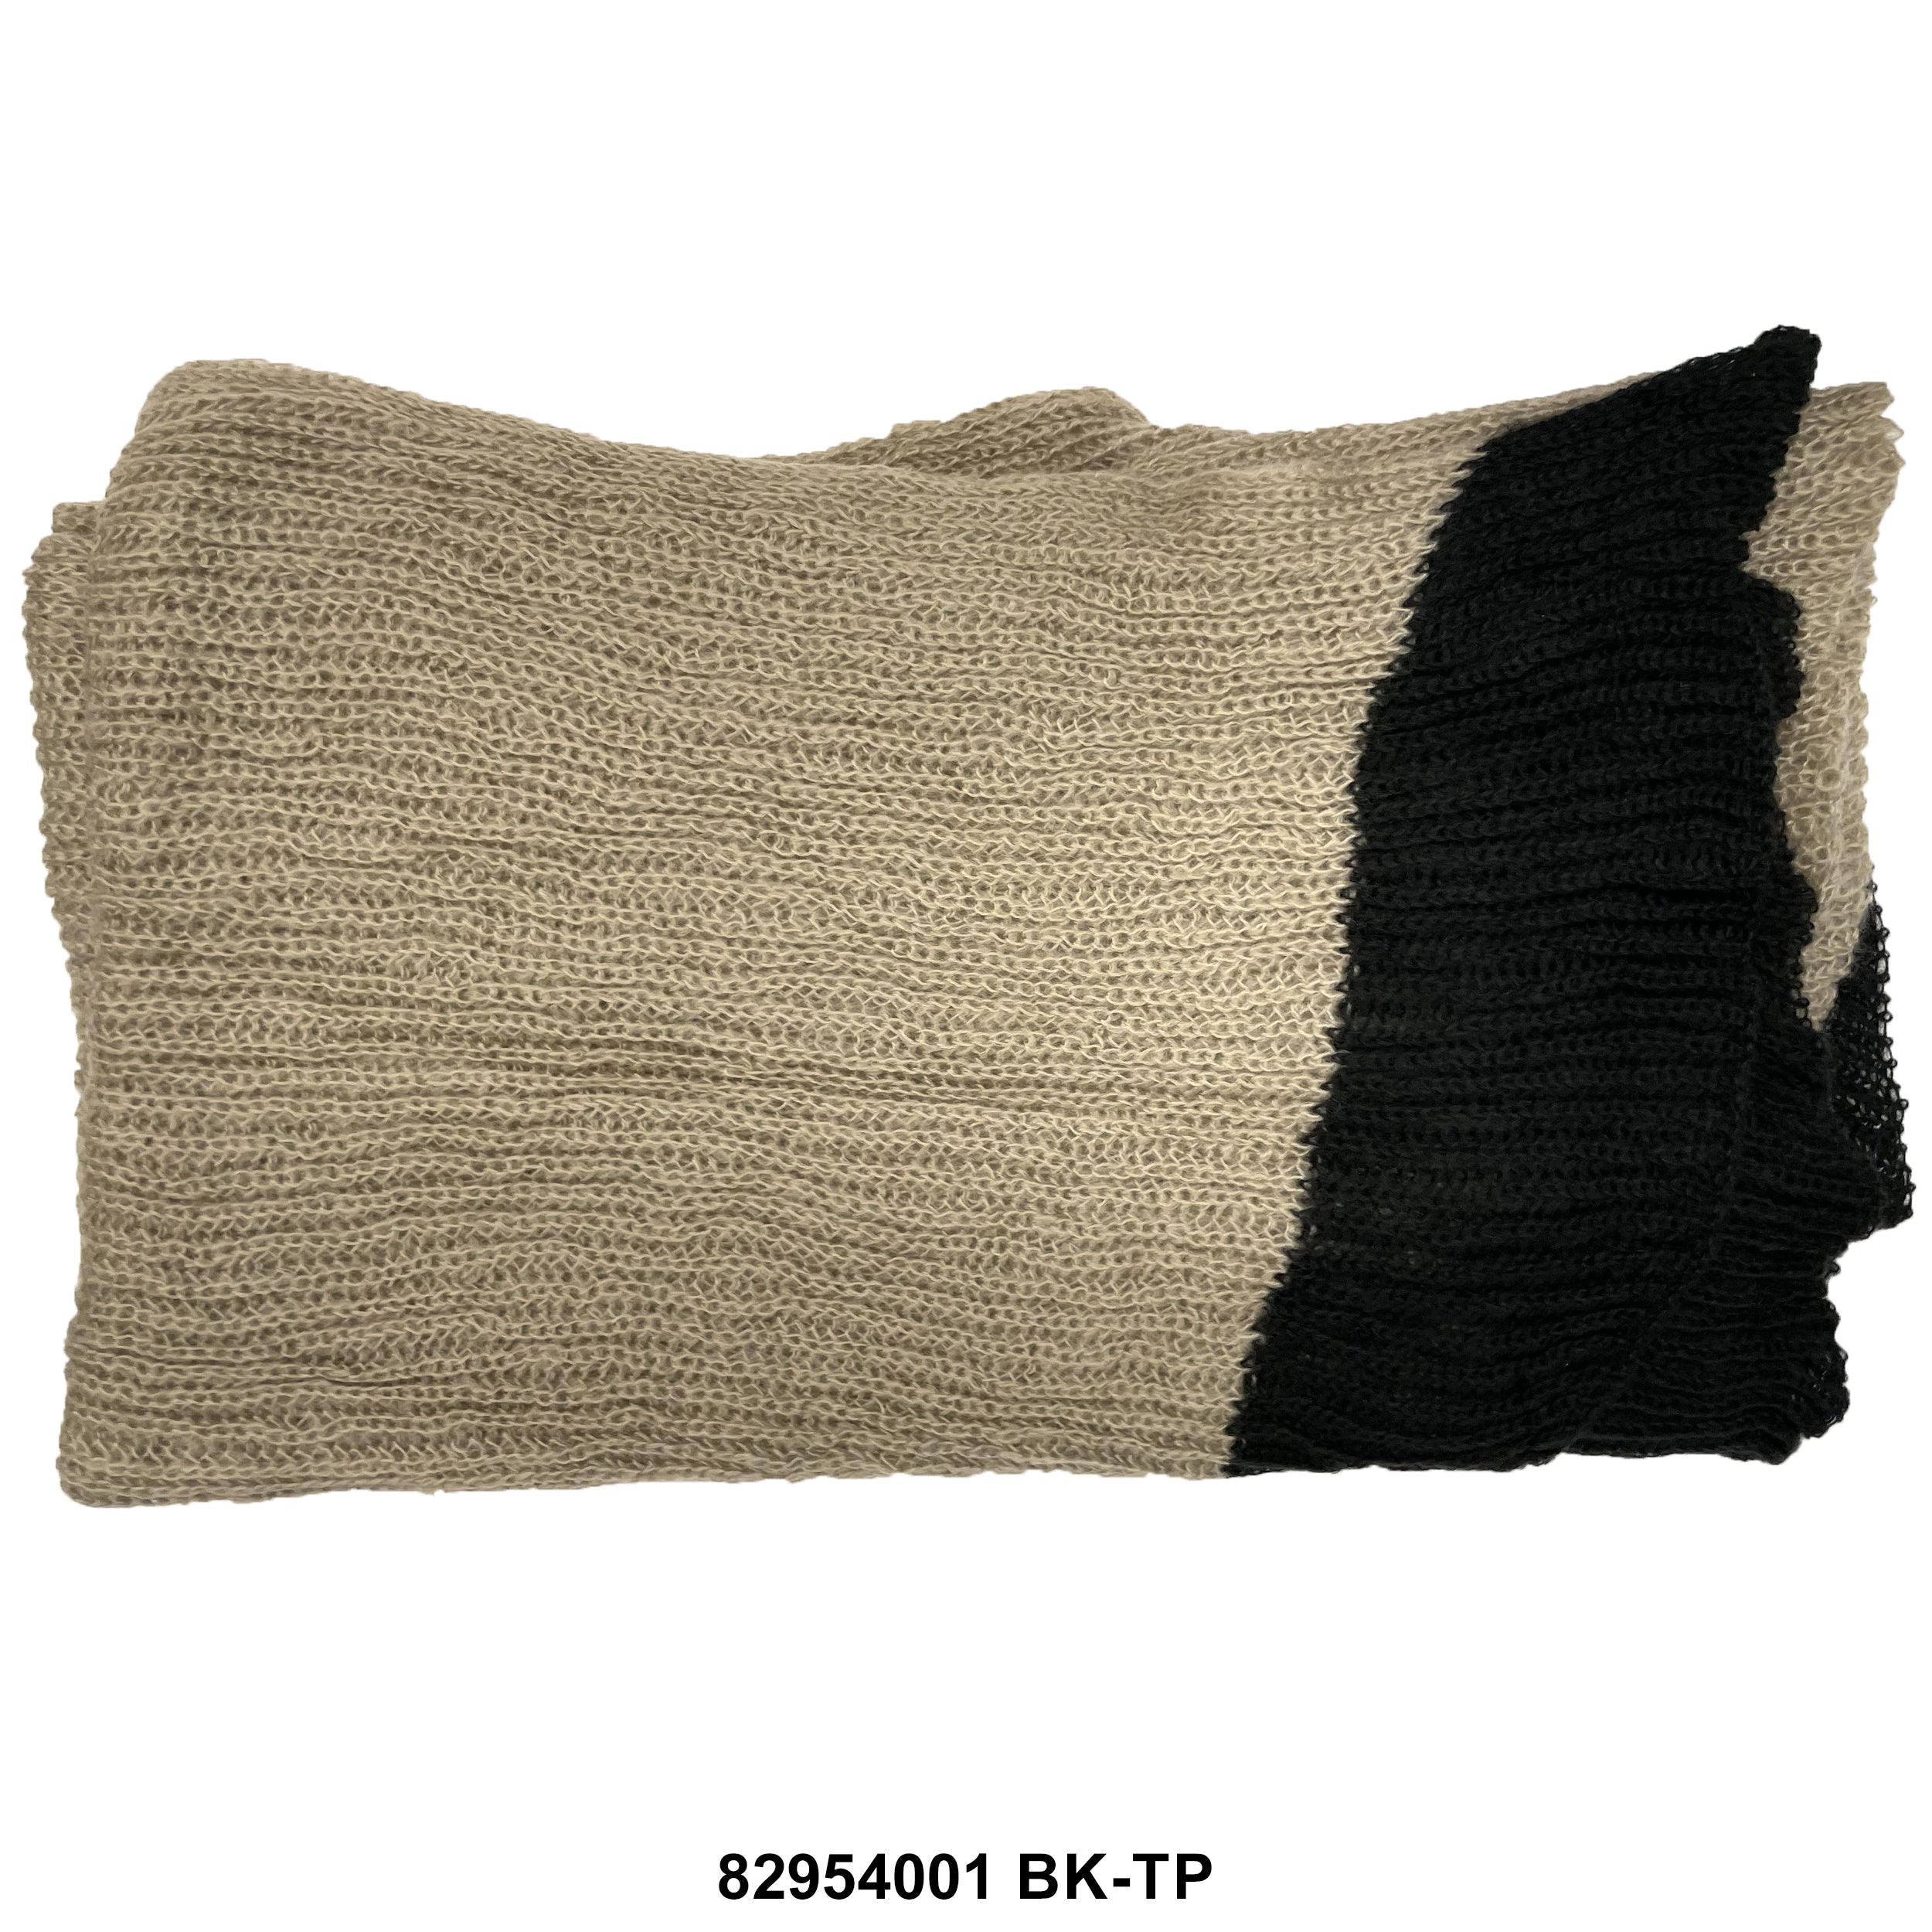 Warm Knitted Shawls 82954001 BK-TP